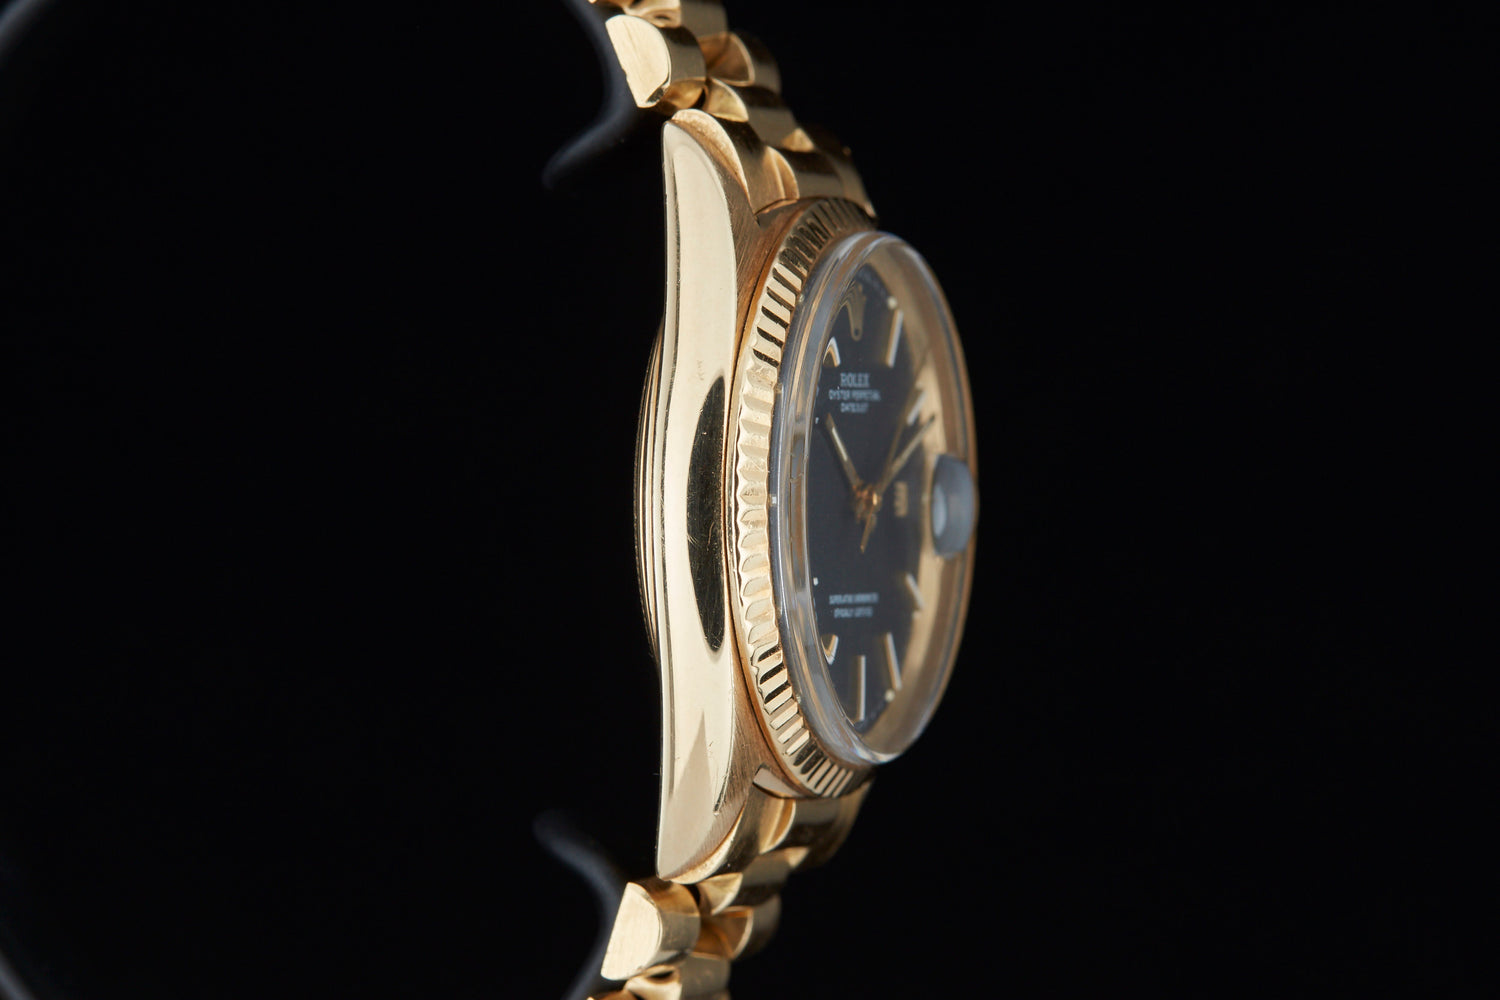 Solid gold vintage Rolex Datejust on black background sideview